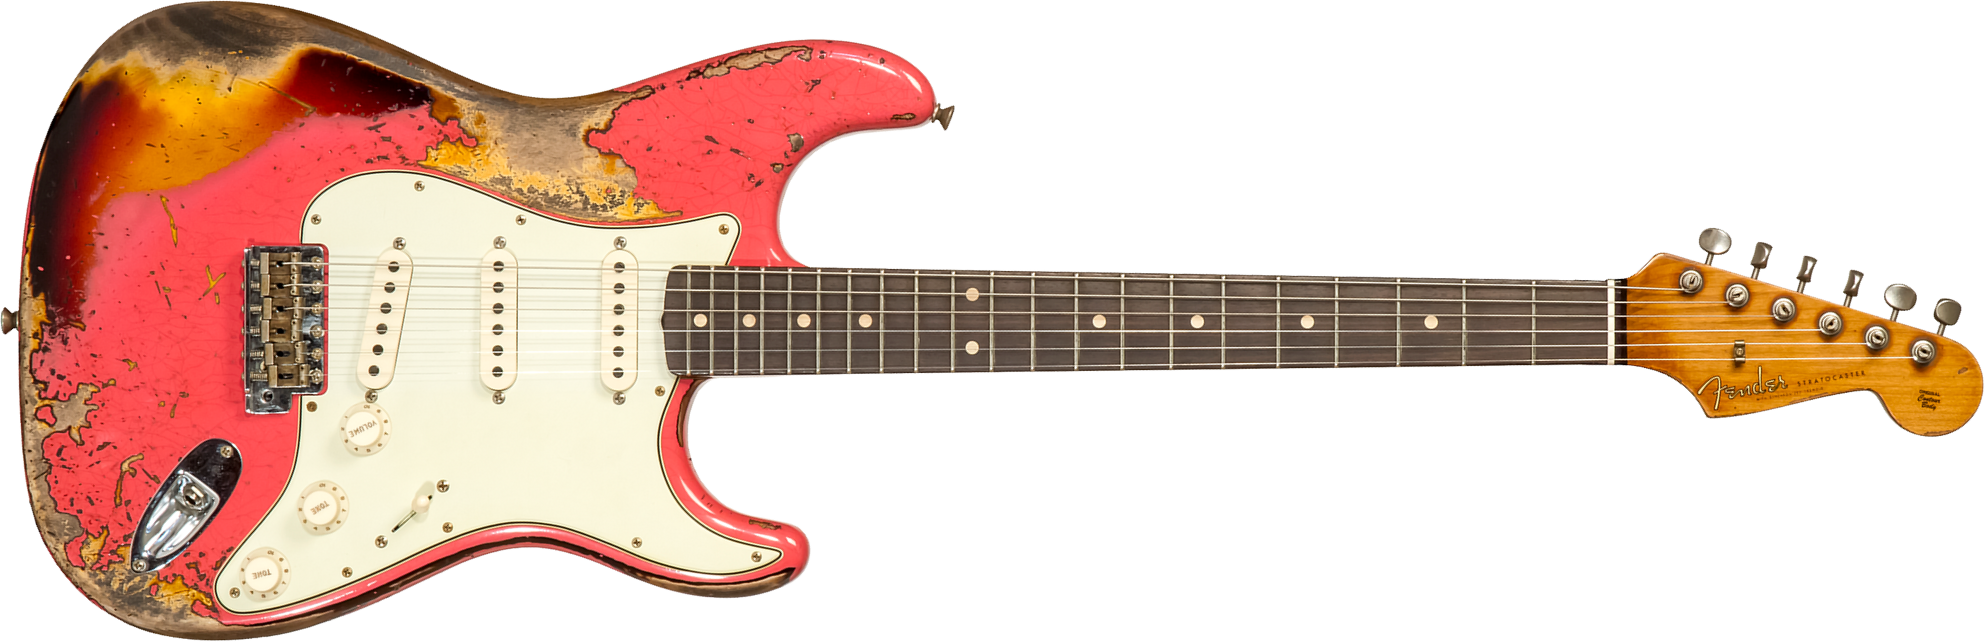 Fender Custom Shop Strat 1960/63 3s Trem Rw #cz566764 - Super Heavy Relic Fiesta Red Ov. 3-color Sunburst - Guitarra eléctrica con forma de str. - Mai